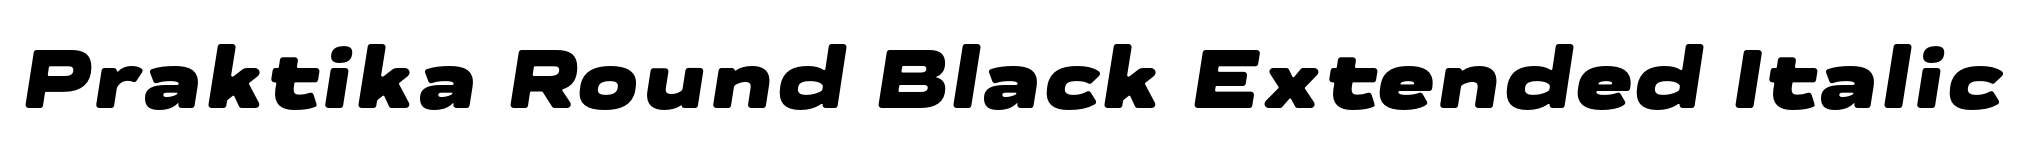 Praktika Round Black Extended Italic image